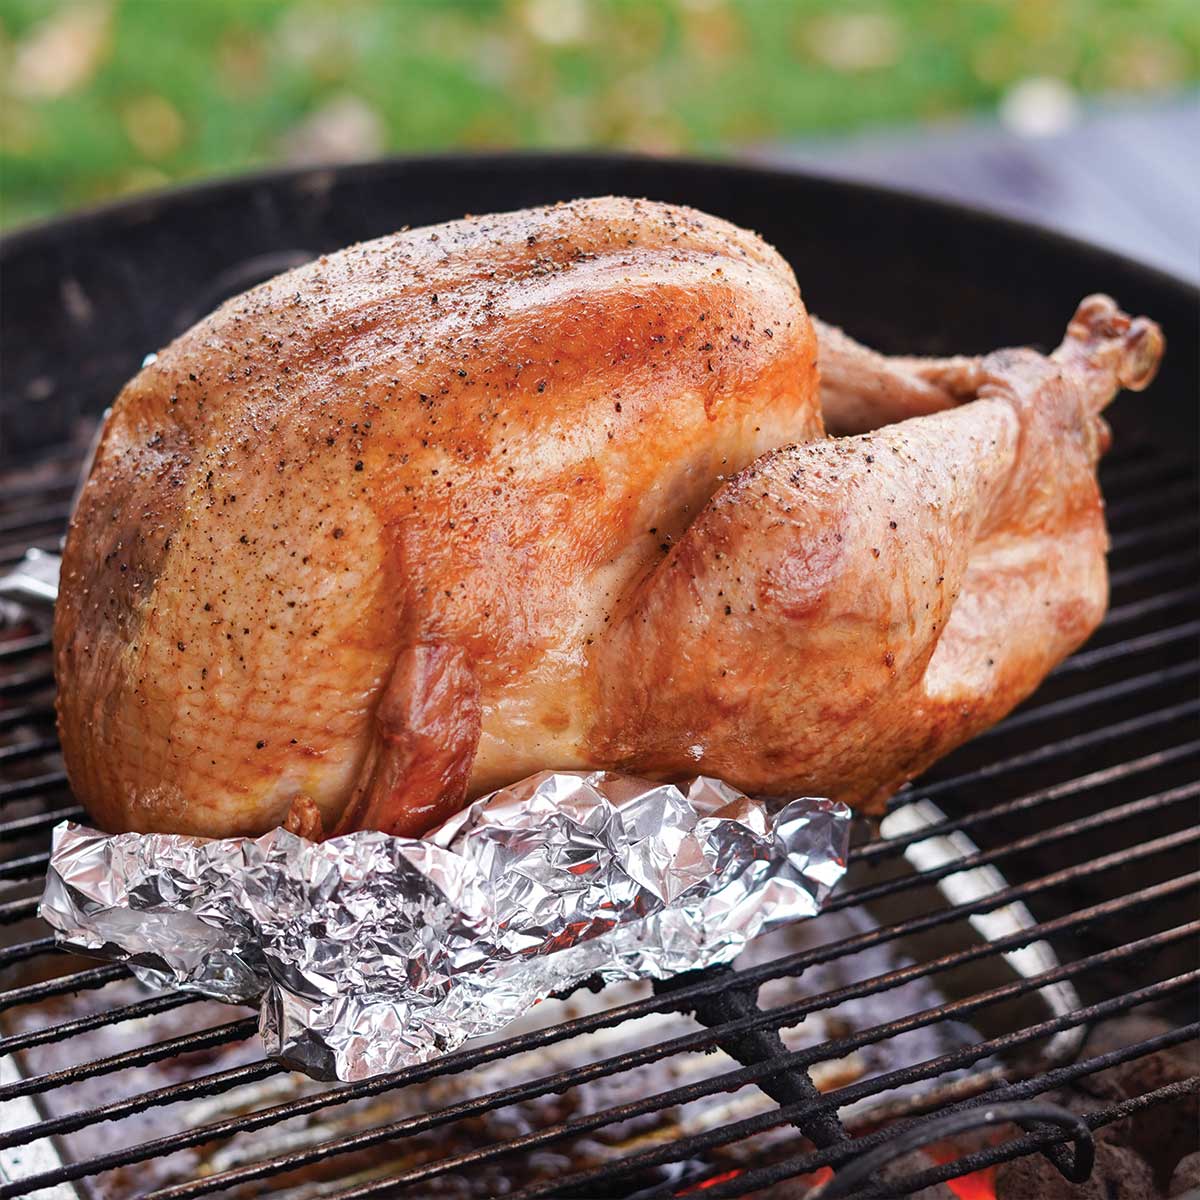 https://freshcoasteats.com/wp-content/uploads/2022/03/whole-turkey-on-the-grill-recipe.jpg